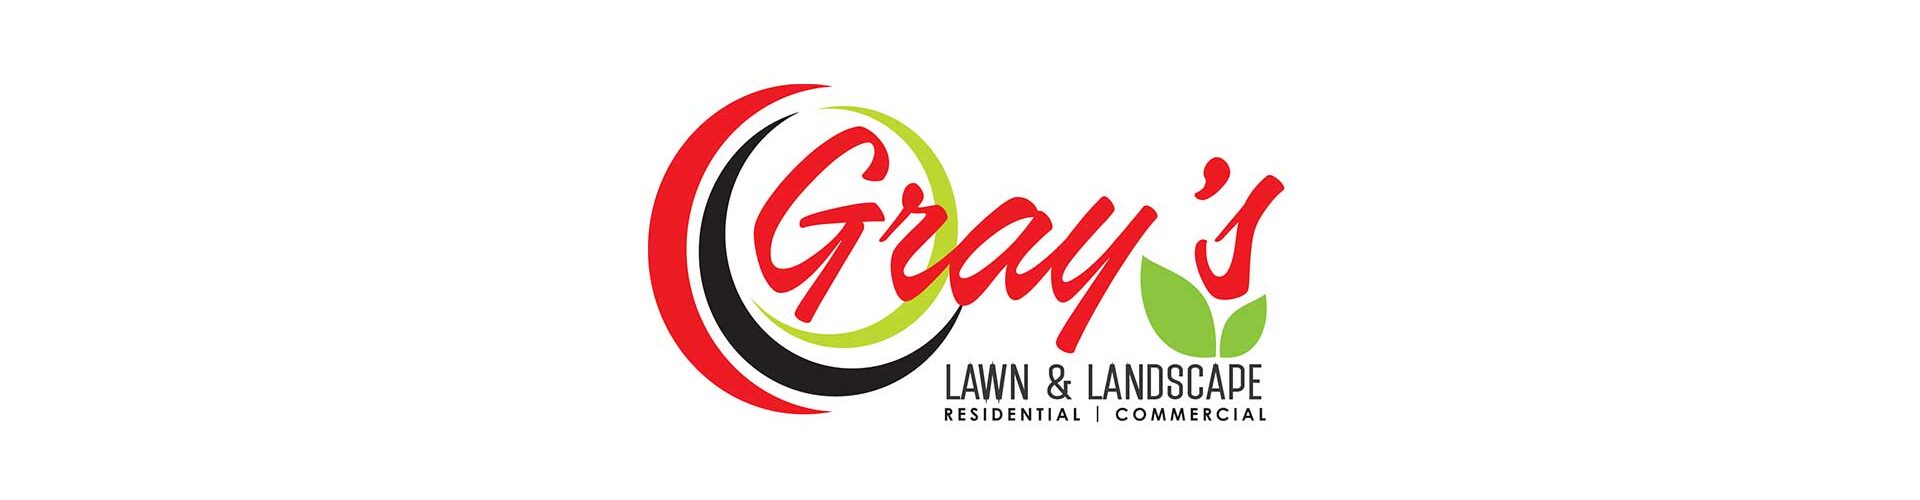 Gray-Lawn-Header